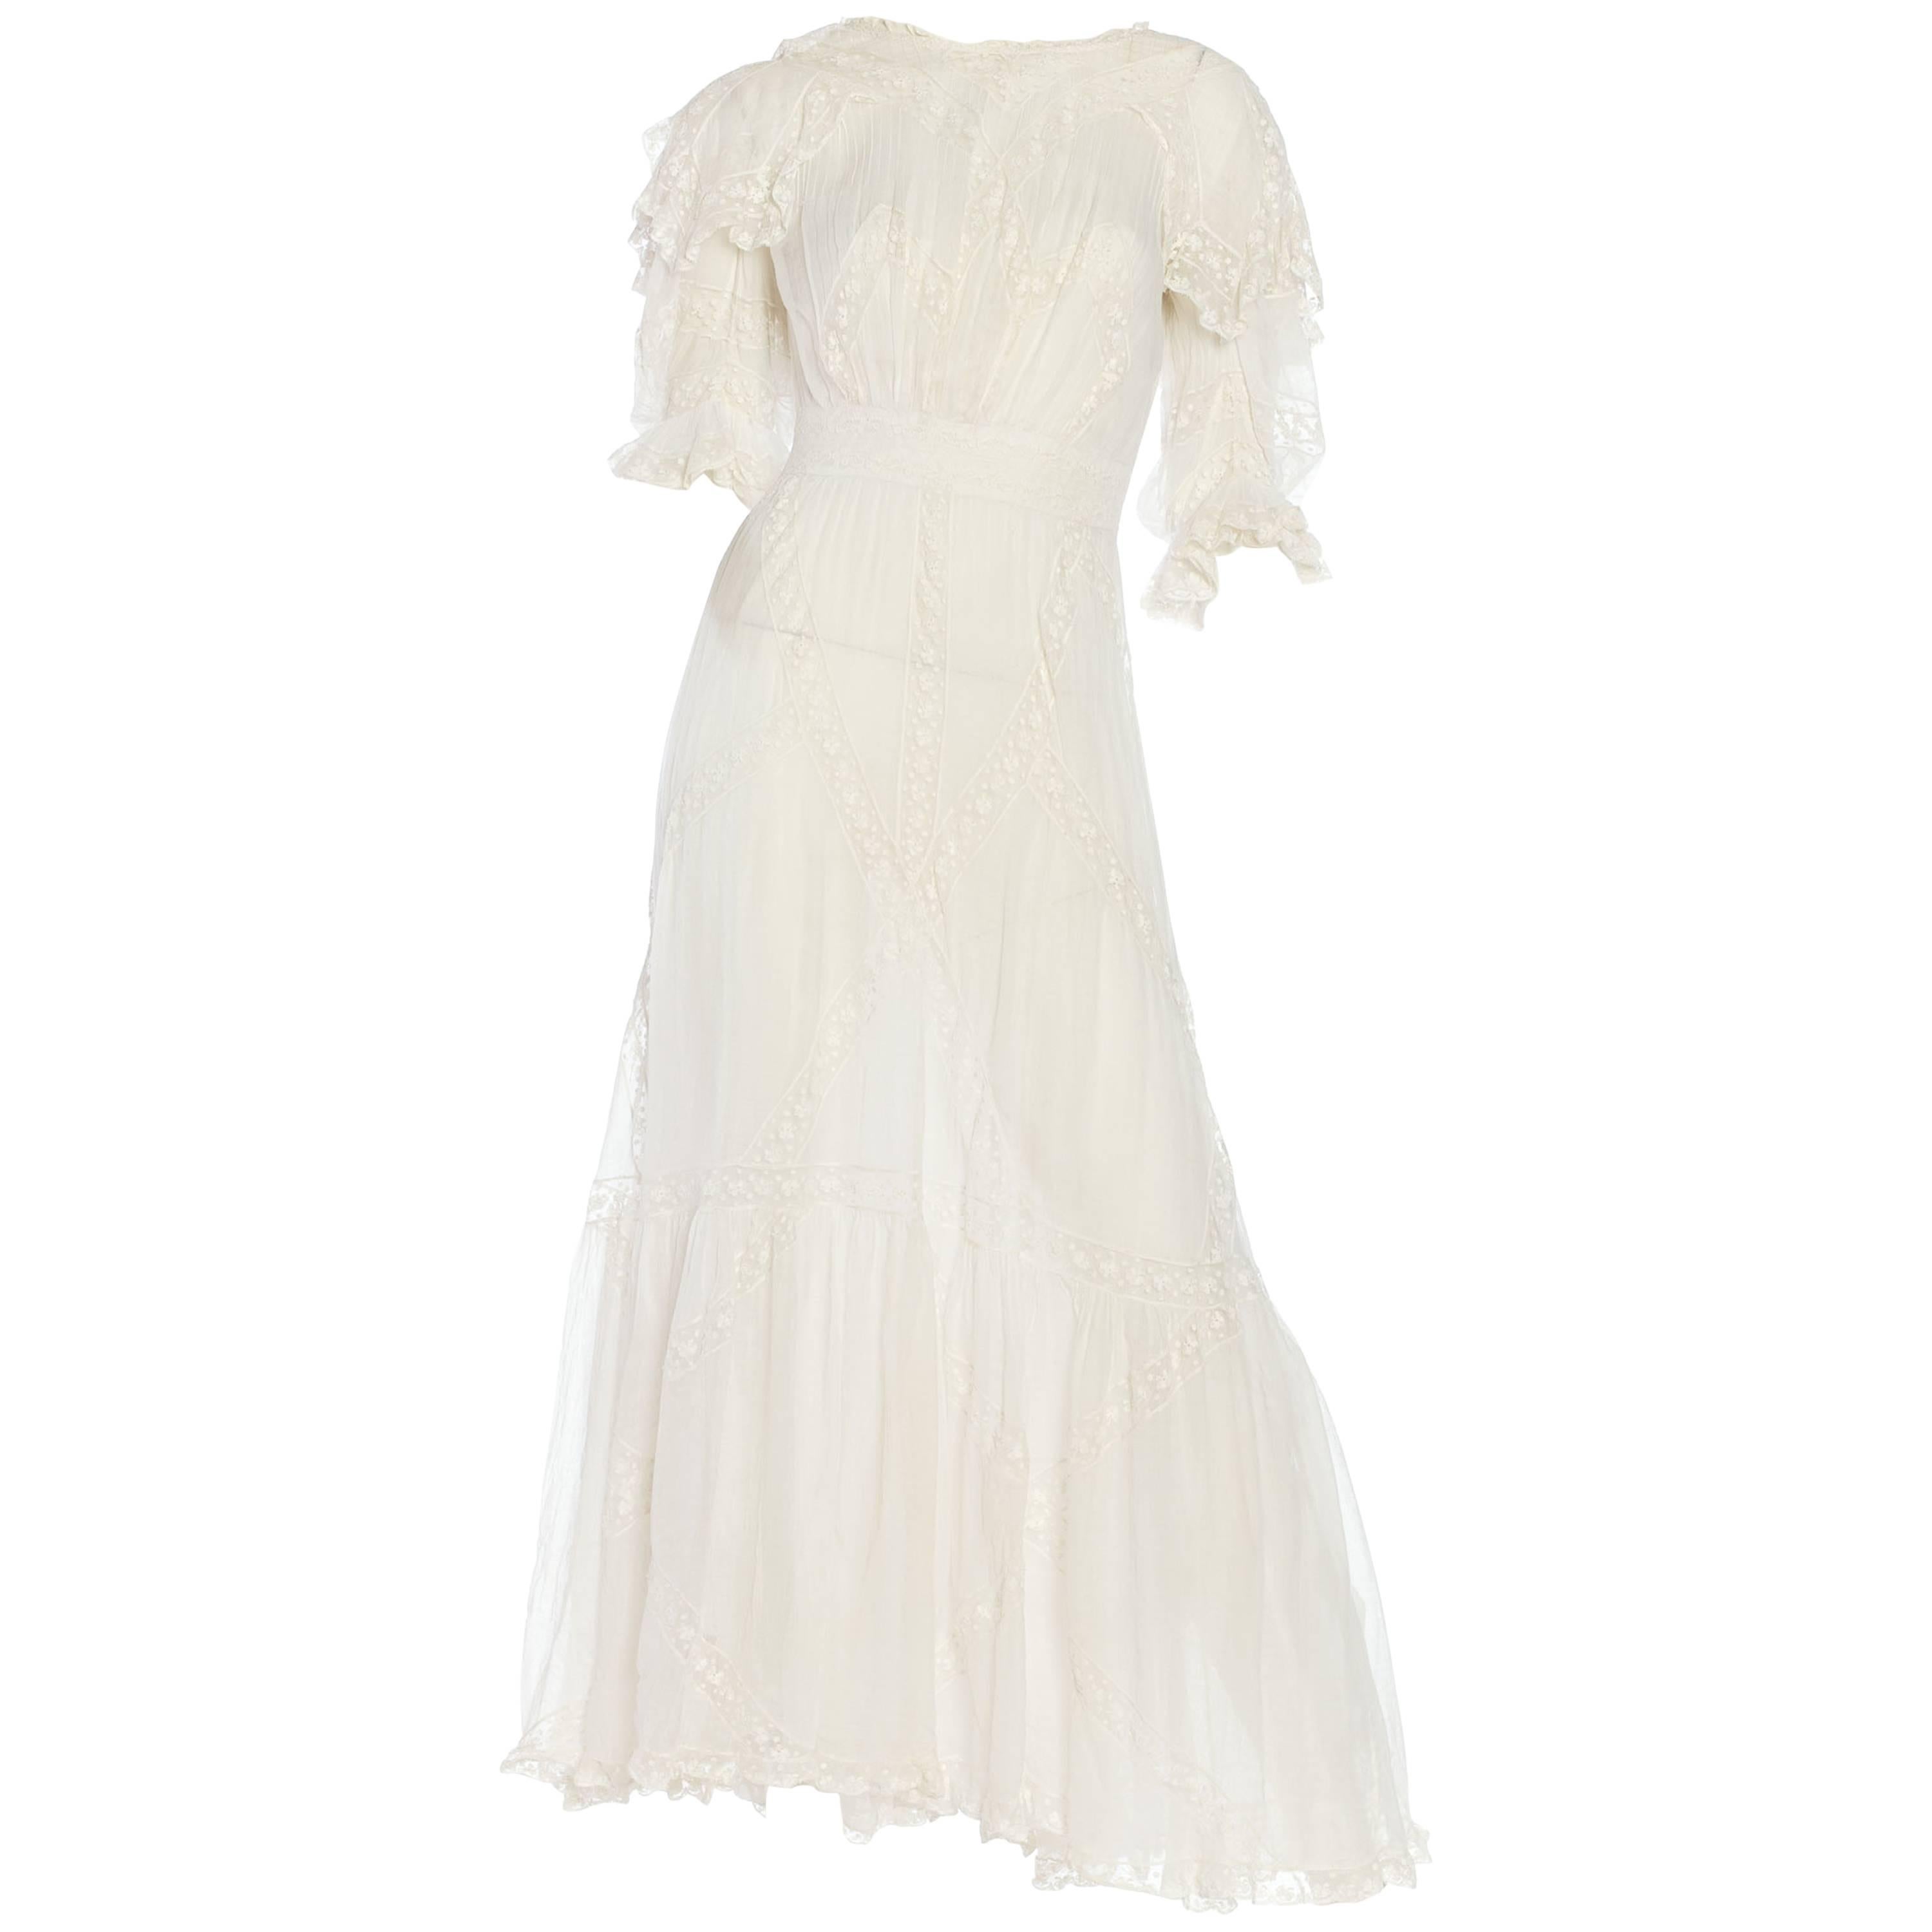 Belle Epoque Late Victorian Cotton and Lace Tea Dress